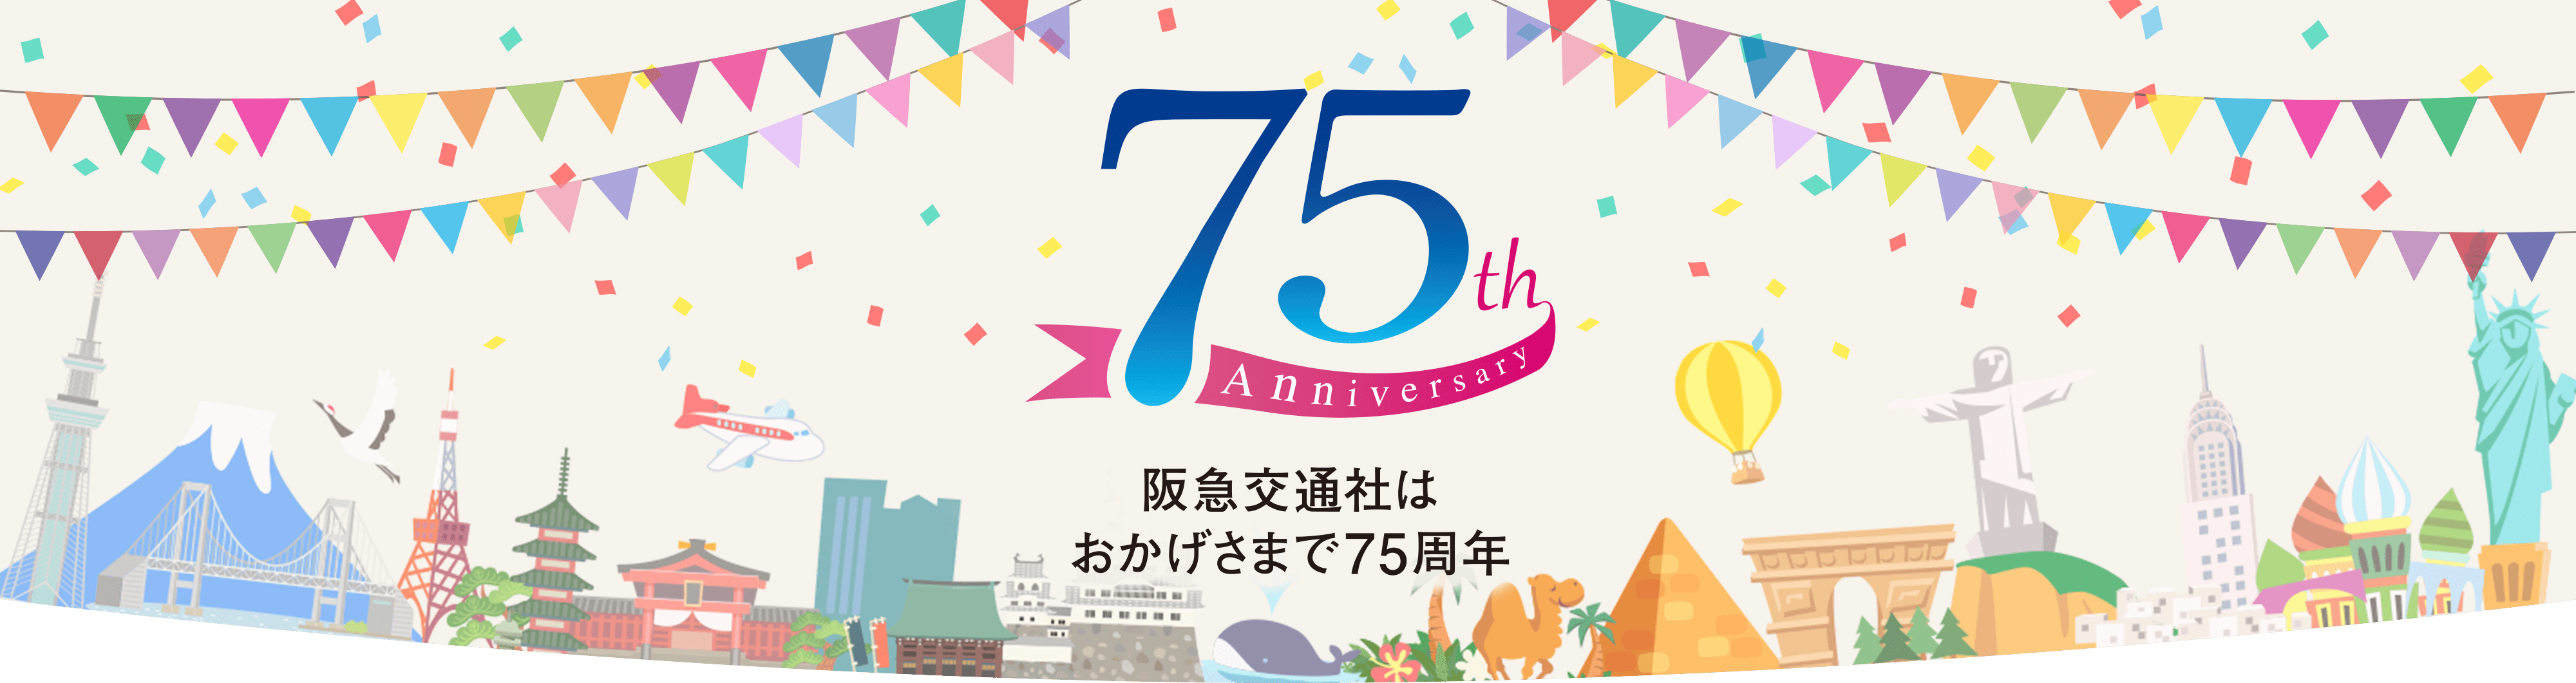 【海外ツアー】創業75周年記念特集